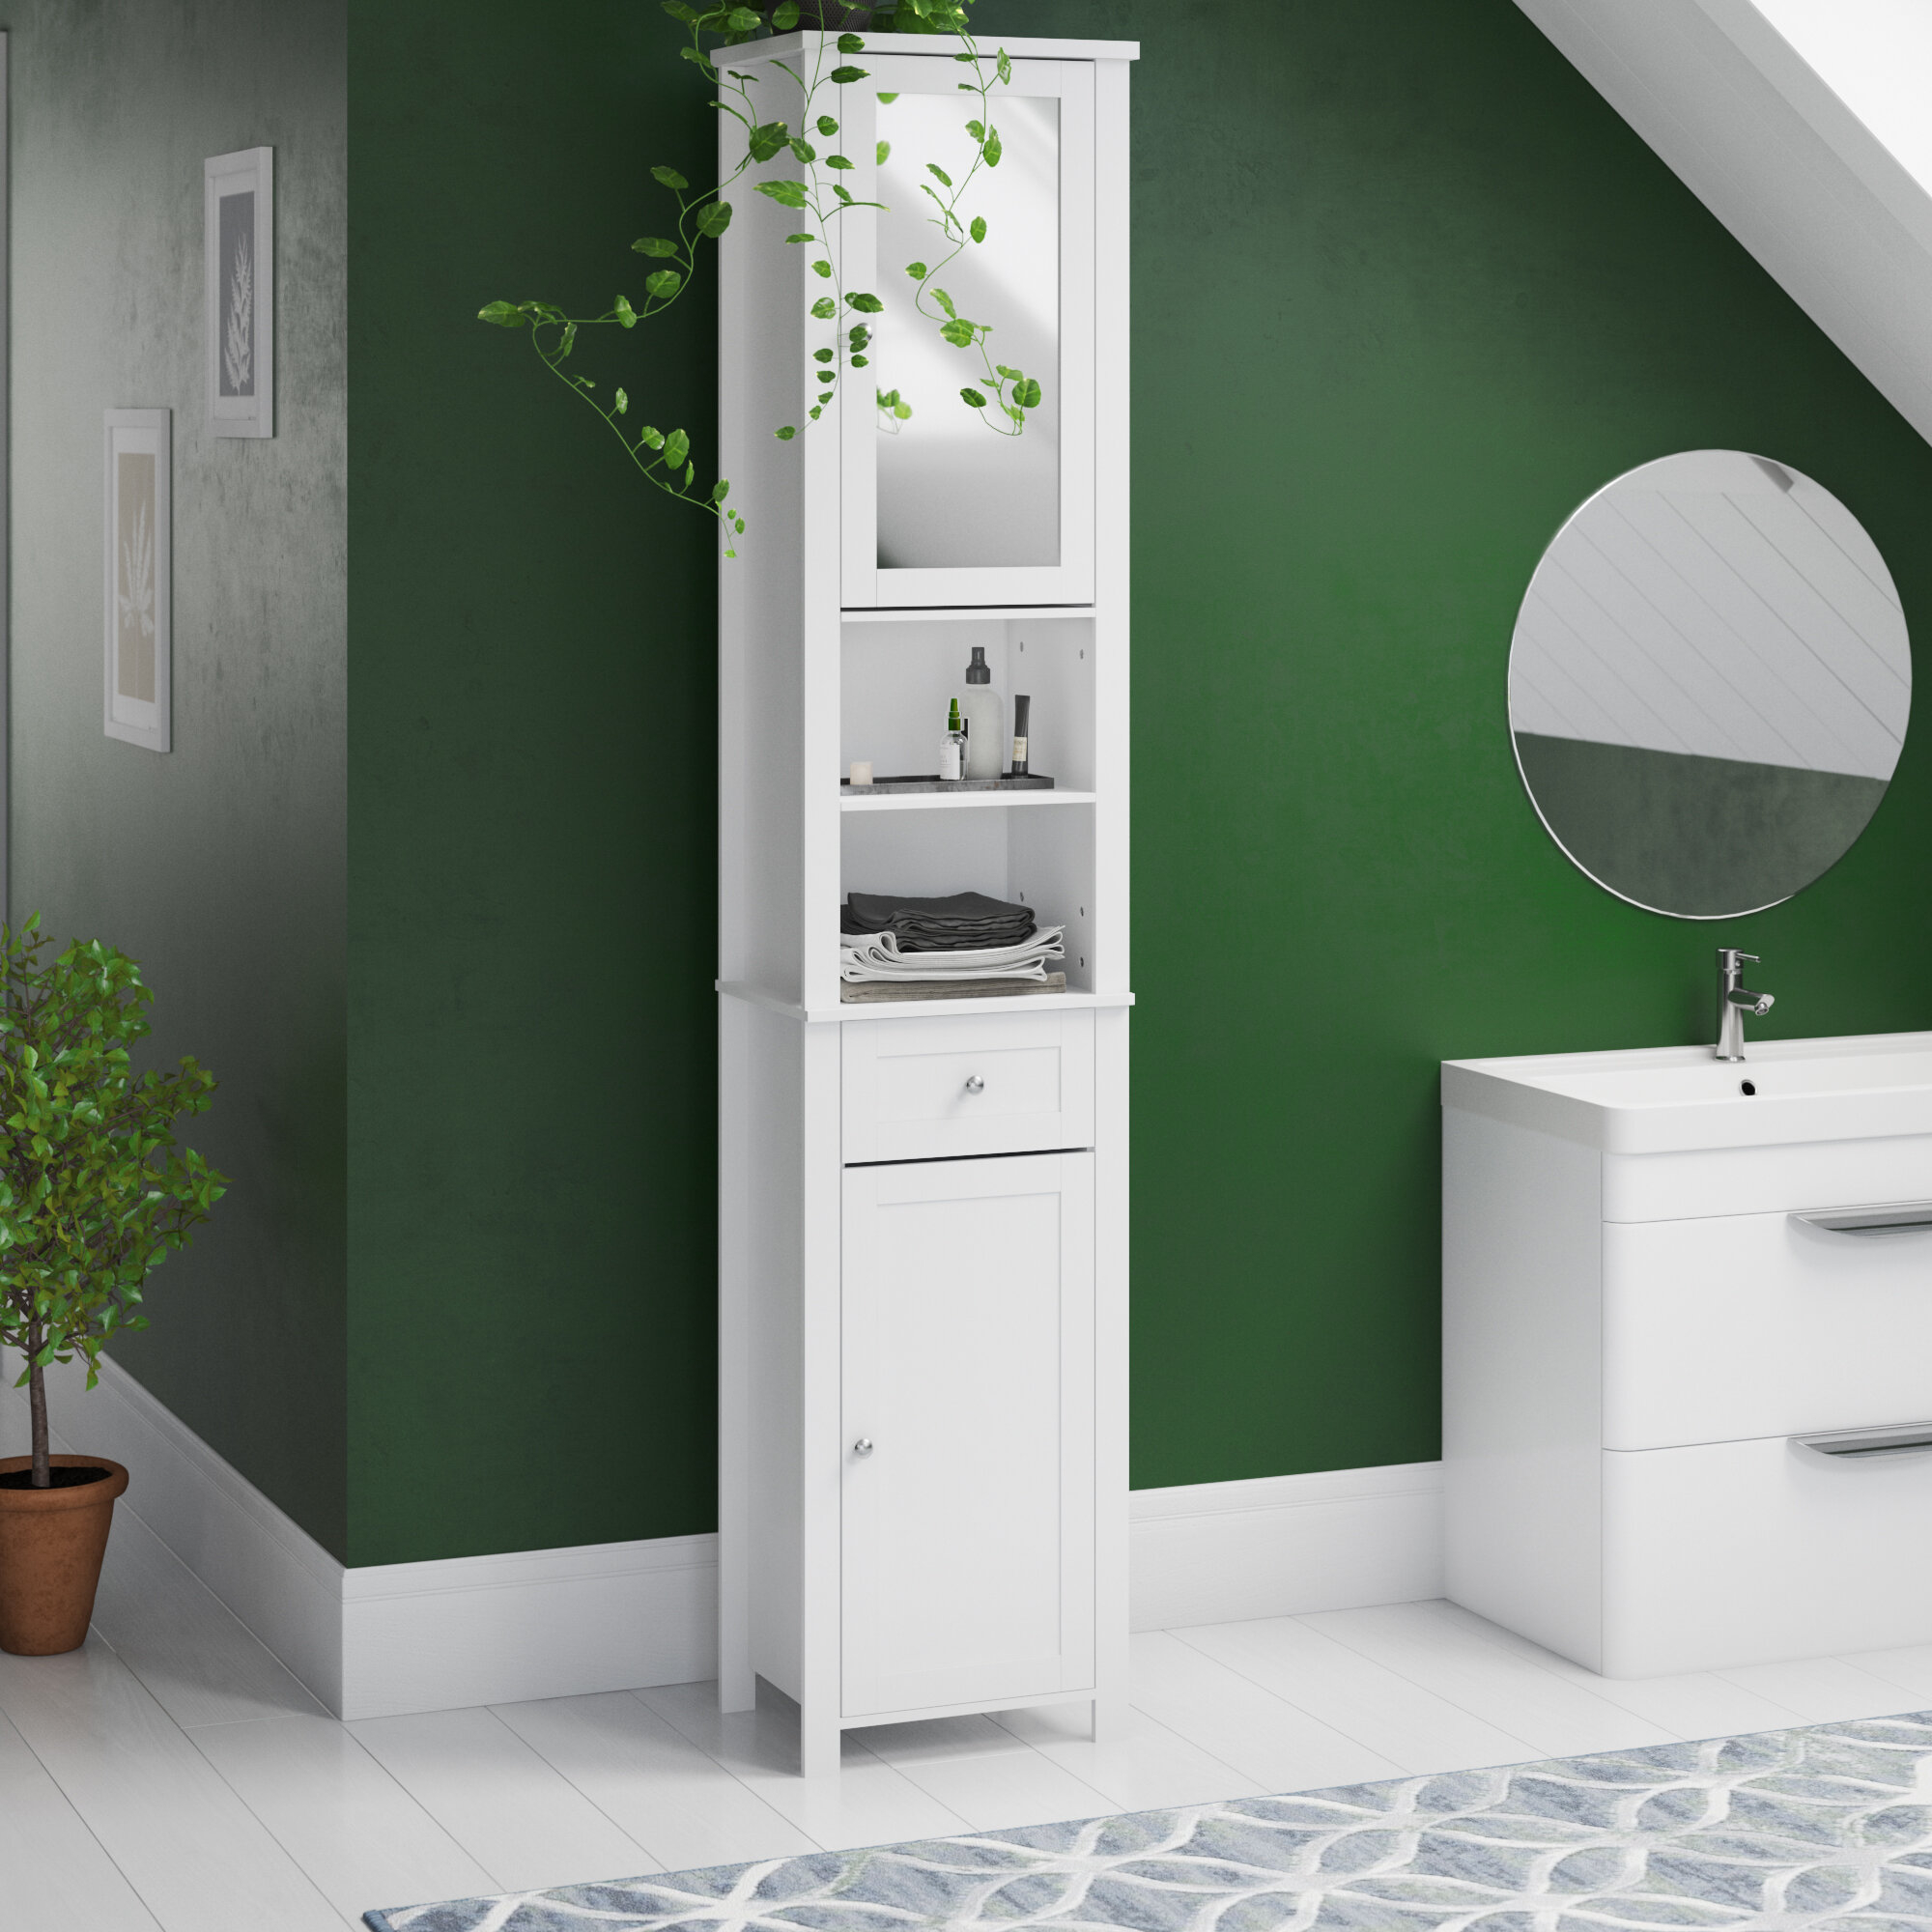 Floor Standing Bathroom Furniture Faucet Ideas Site